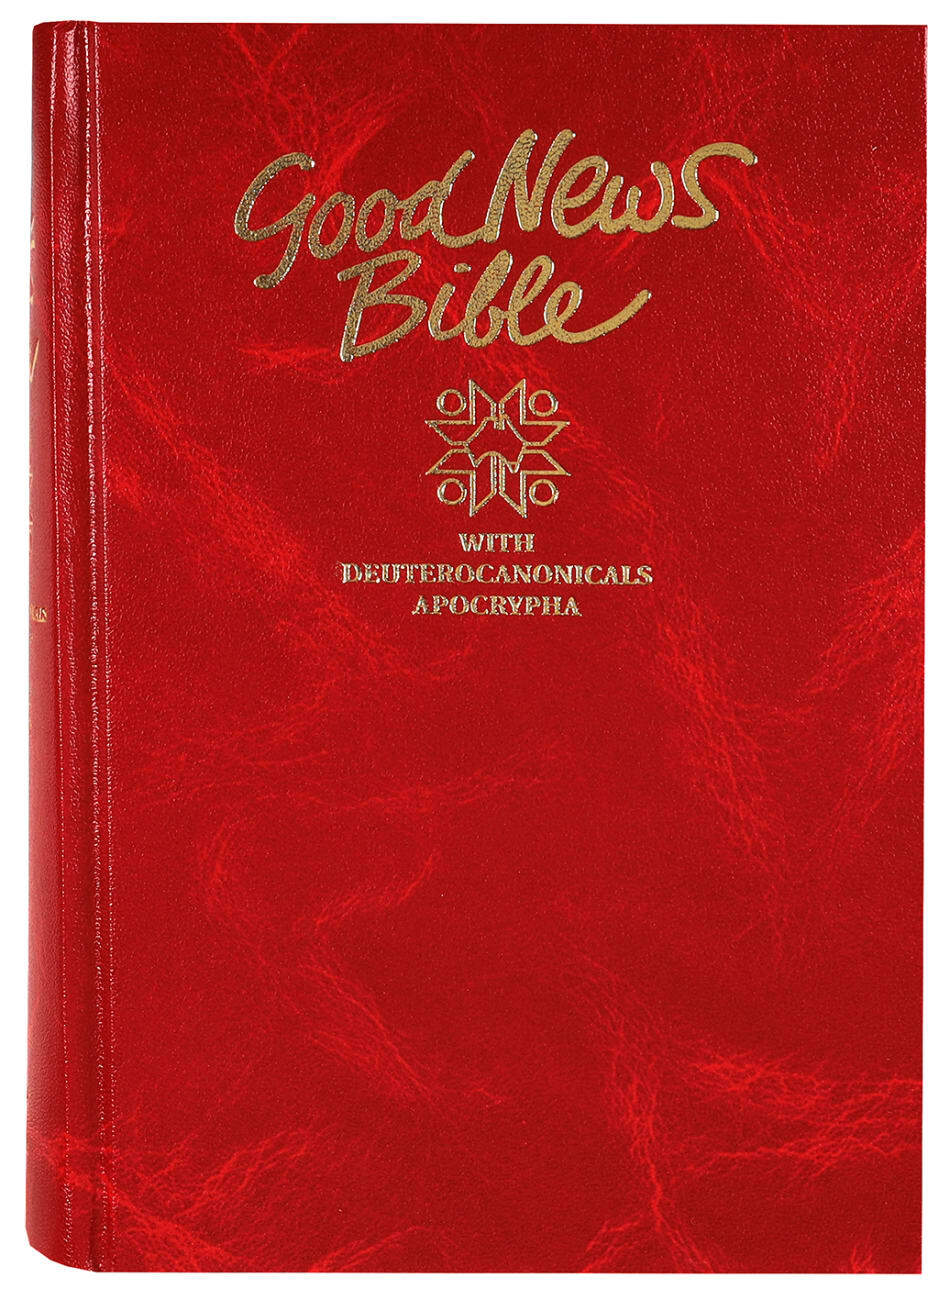 GOOD NEWS BIBLE CATHOLIC EDITION HARD COVER - main product image